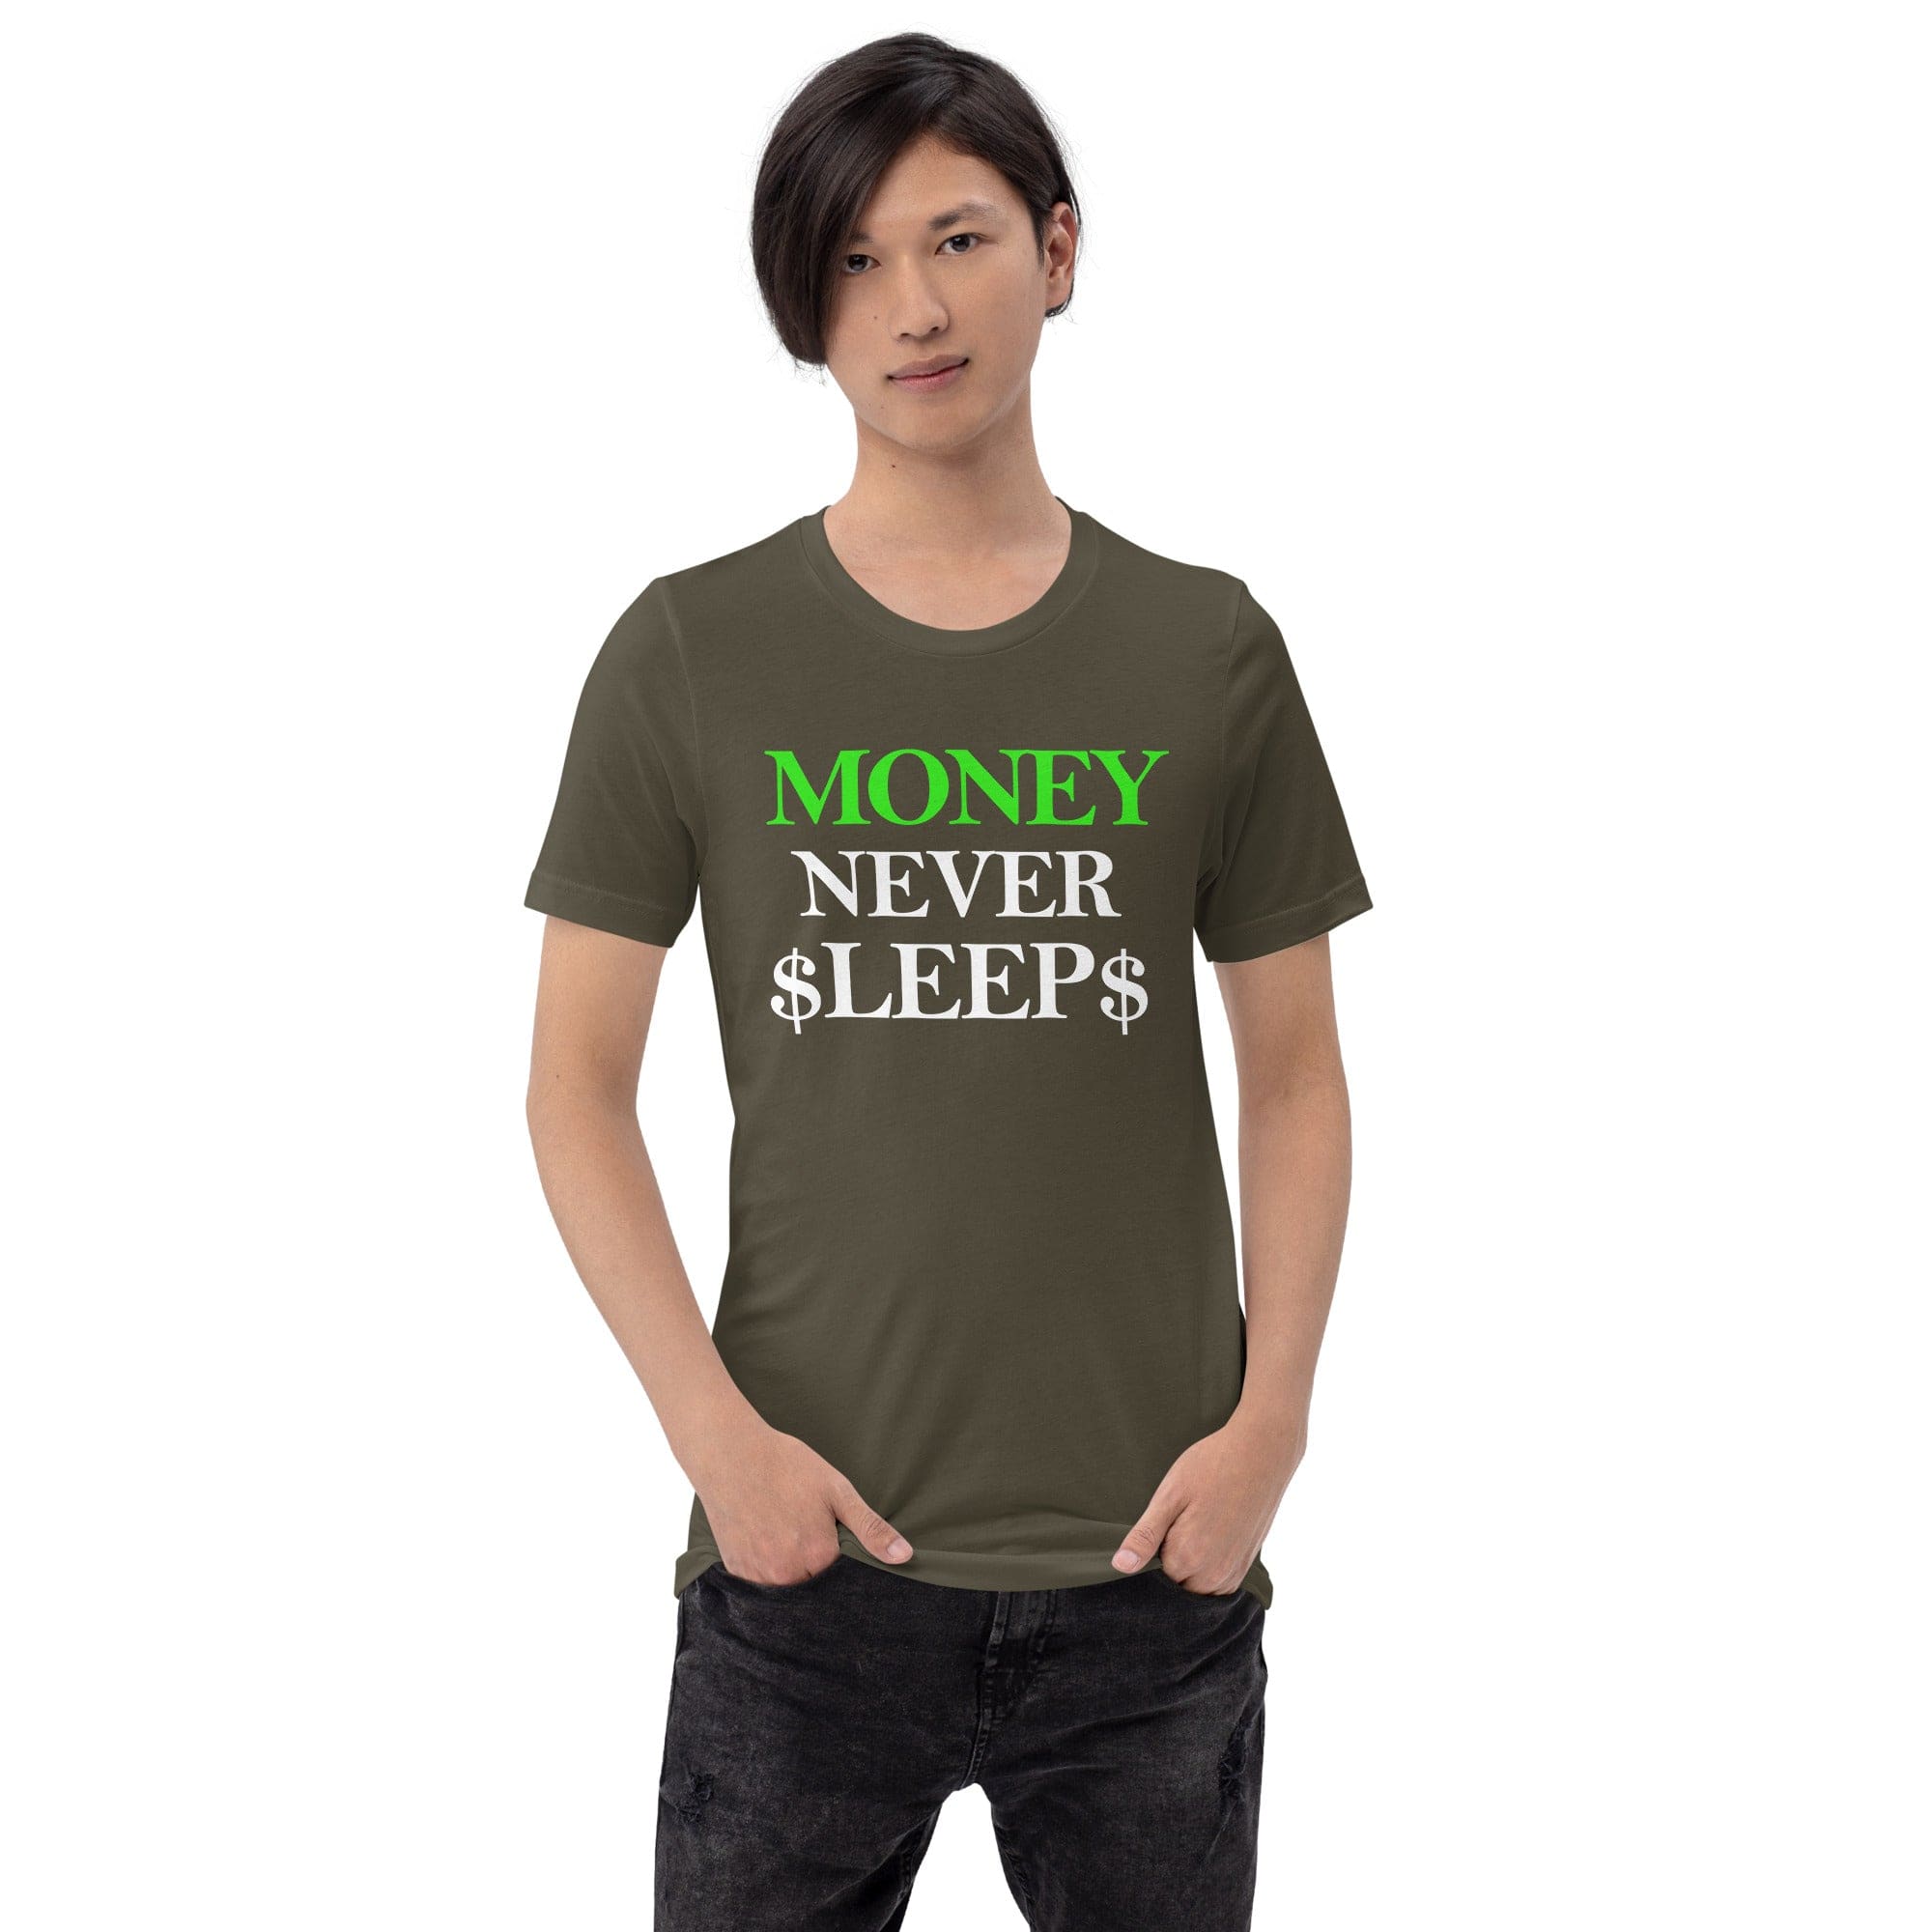 Absolutestacker2 Army / S Money never sleep